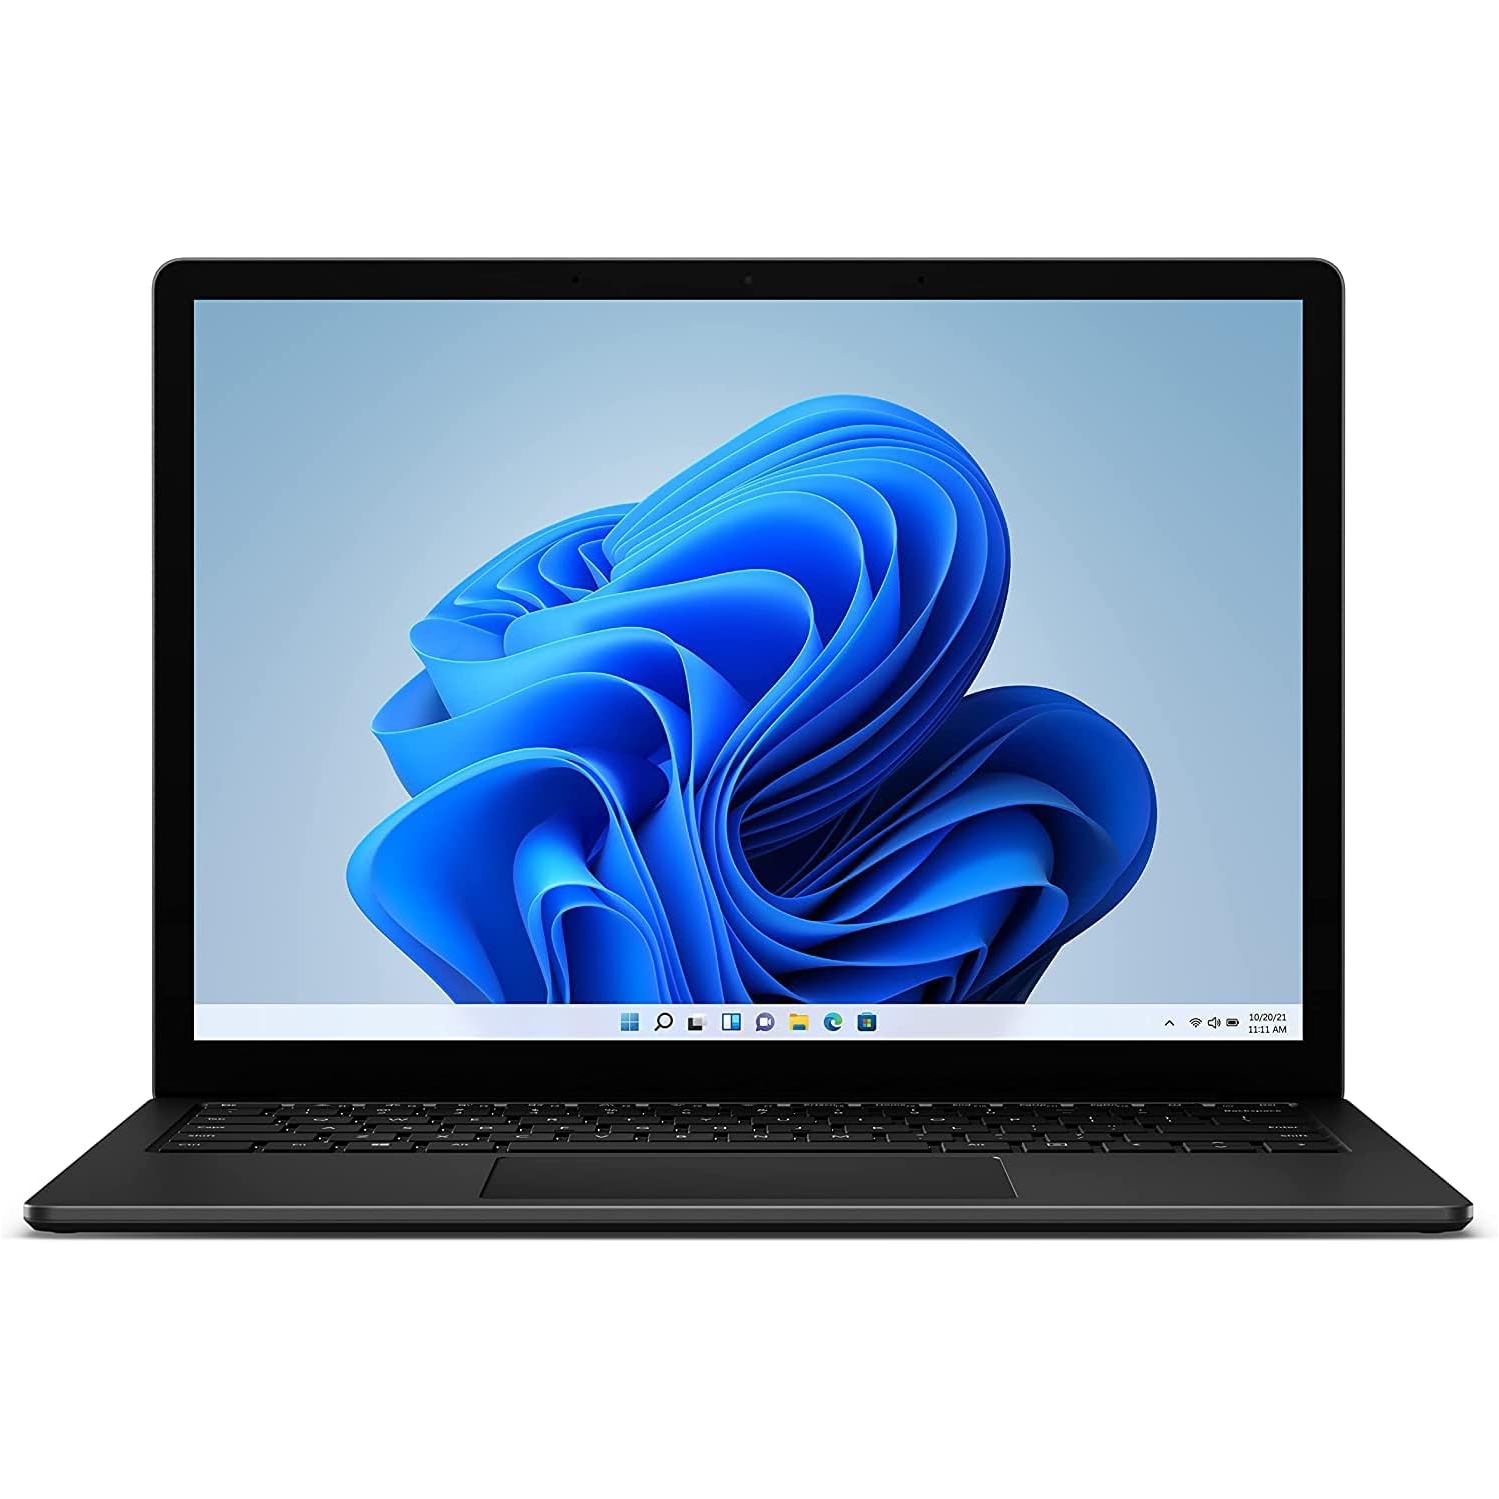 Refurbished (Excellent) Microsoft Surface Laptop 4 - Intel Core i7-1185G7/16GB LPDDR4x/512GB SSD/Windows 11 Home/ 13.5" Screen - Black